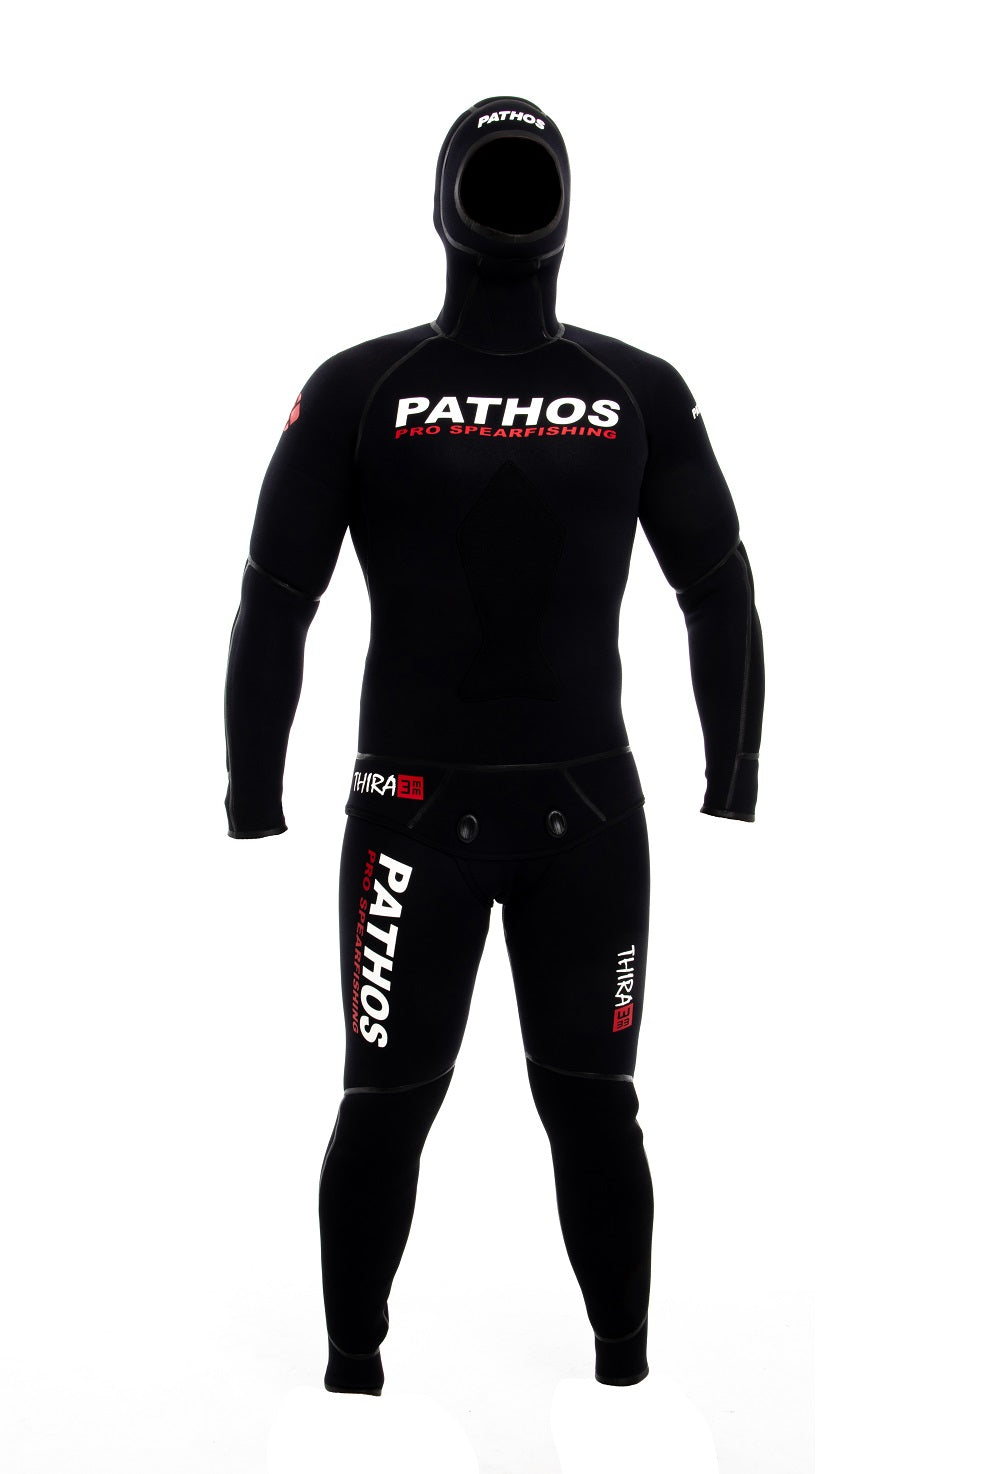 Pathos Thira Black Wetsuit - 3mm